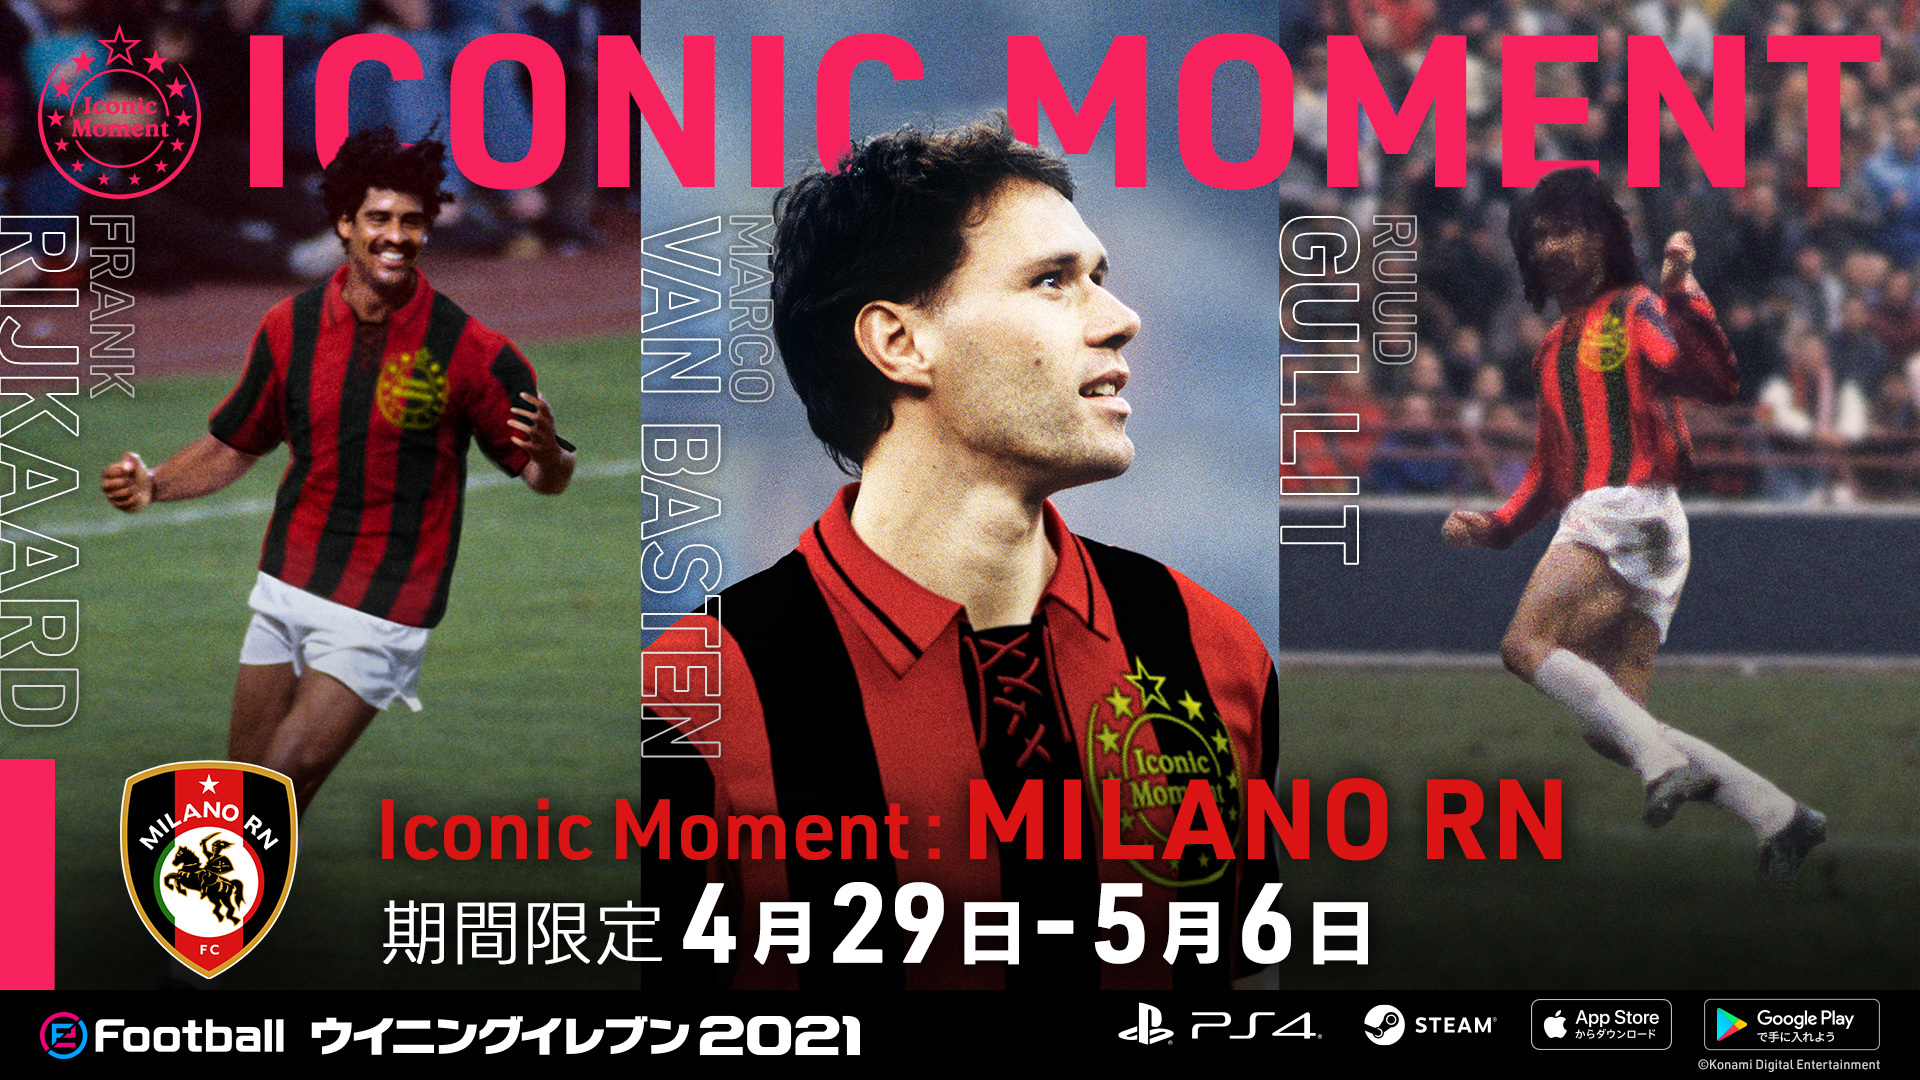 Efootball ウイニングイレブン 21 Season Update 海外版 Iconic Moment Milano Rn Steamニュース